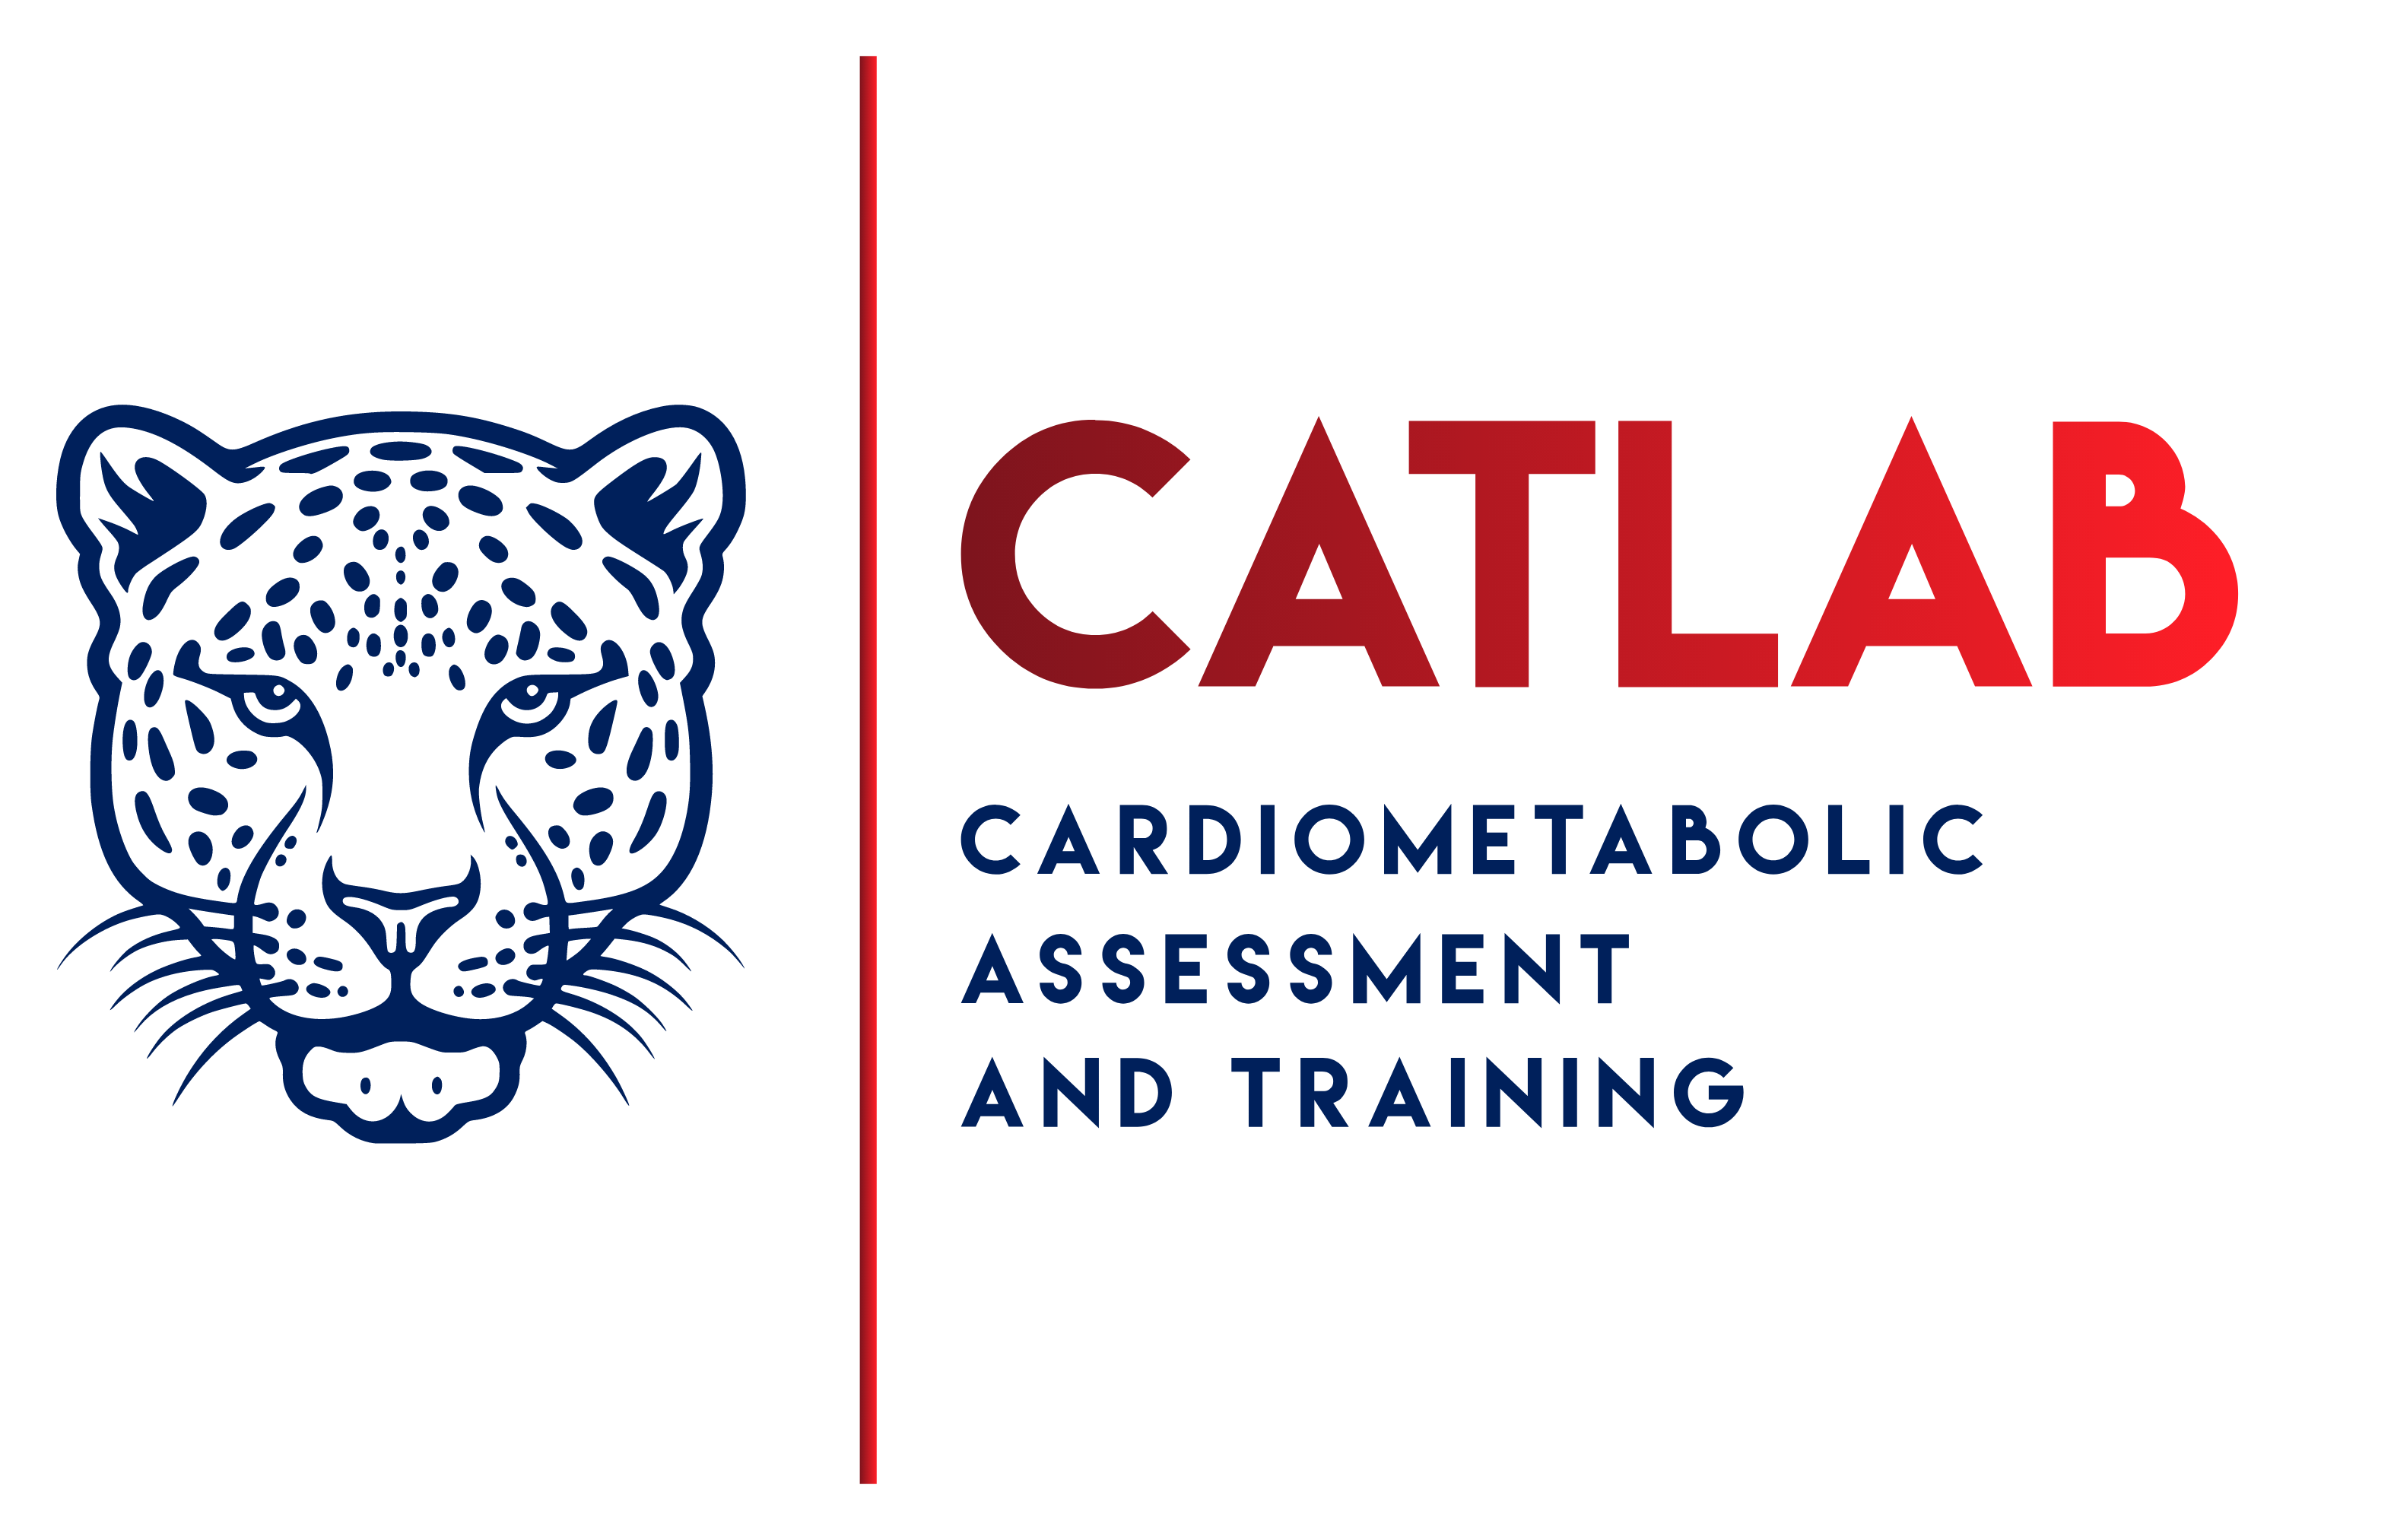 Cardiometabolic Assessment and Training Laboratory